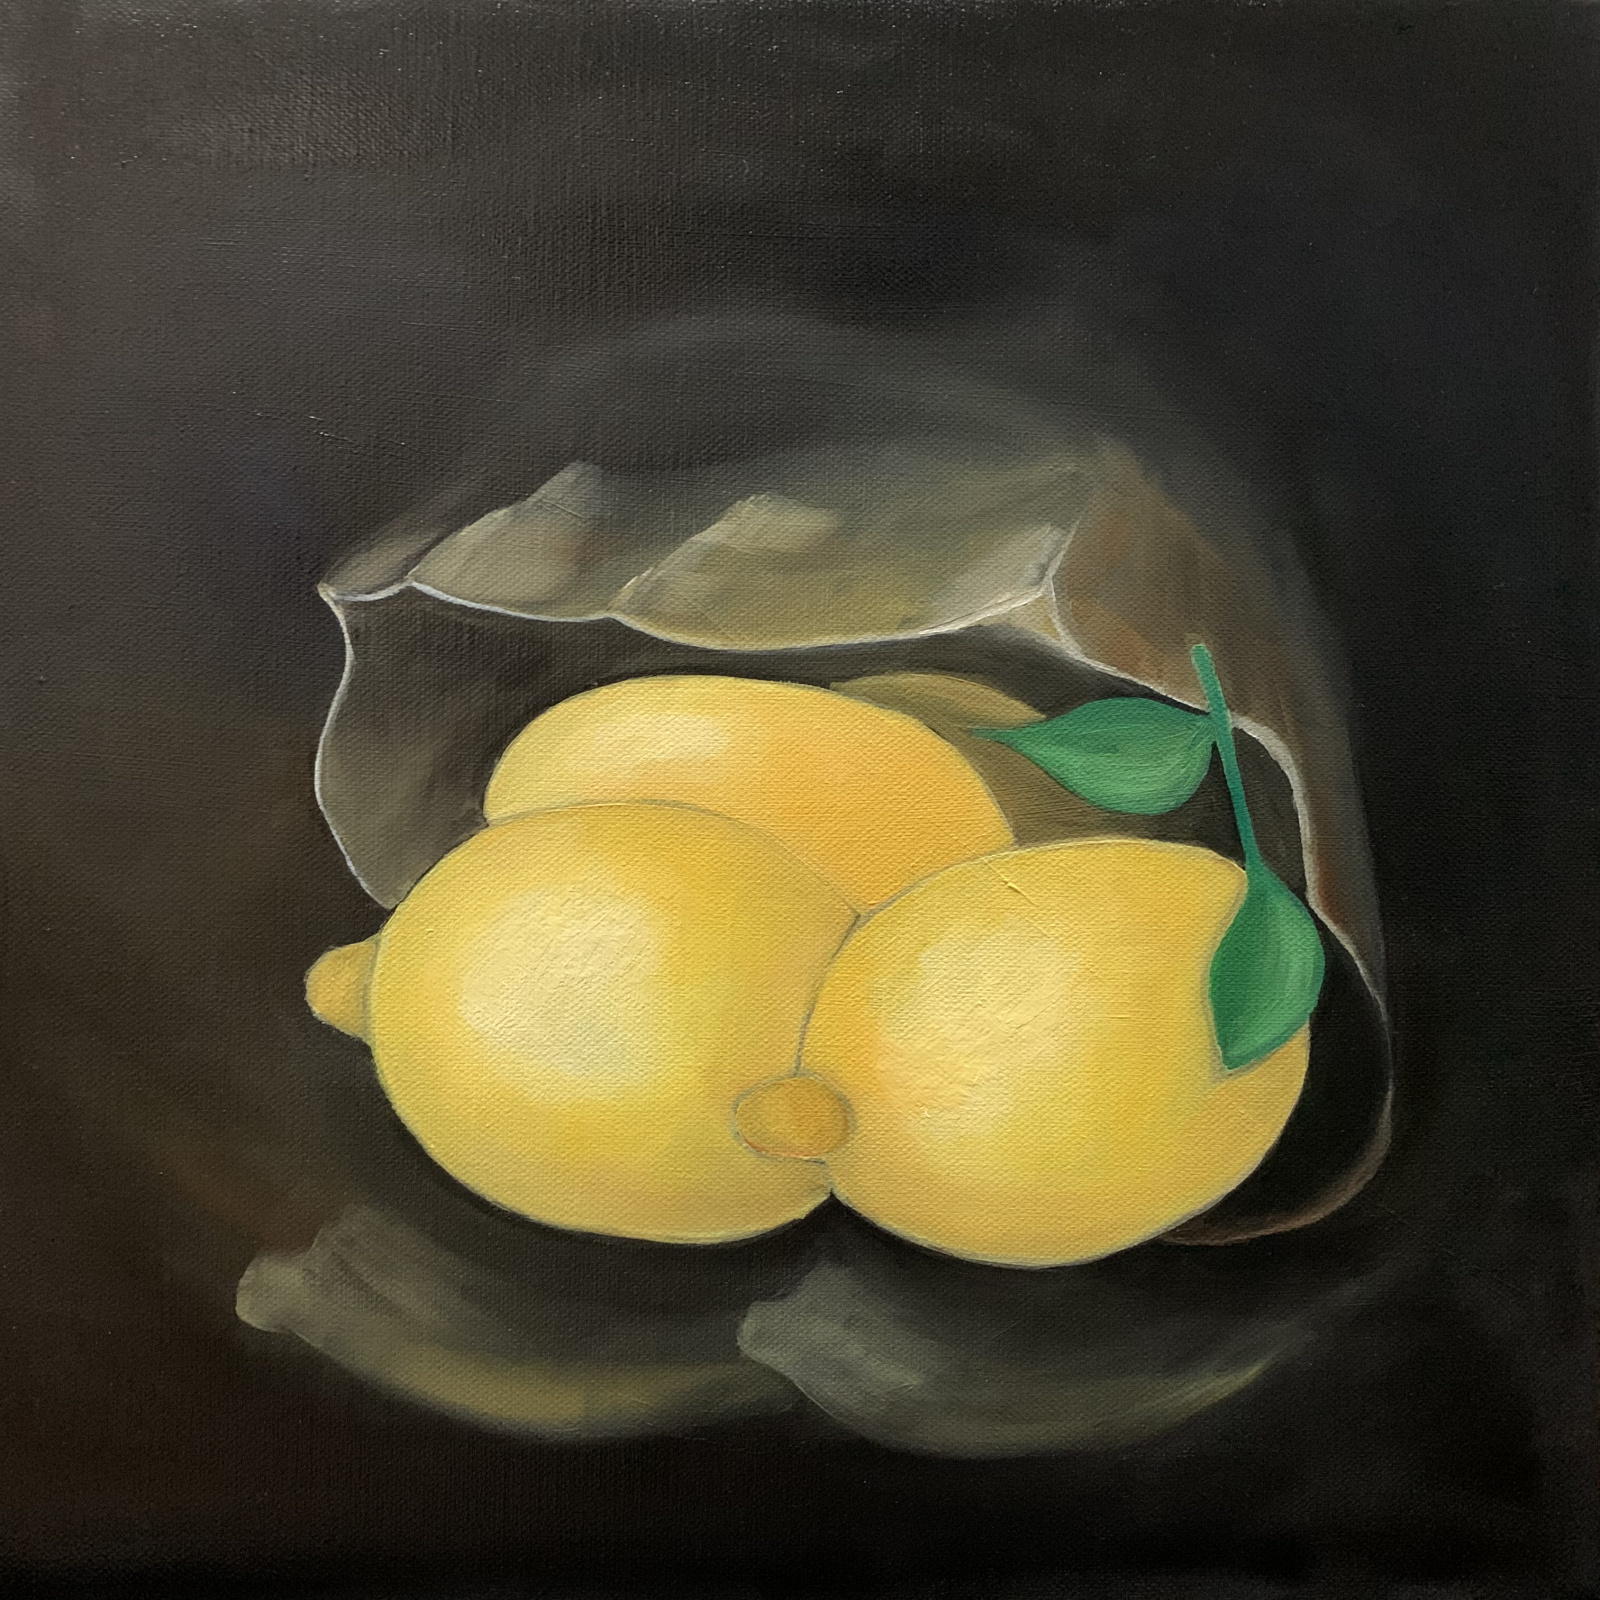 Sweet lemons - 2020 - Selected artworks